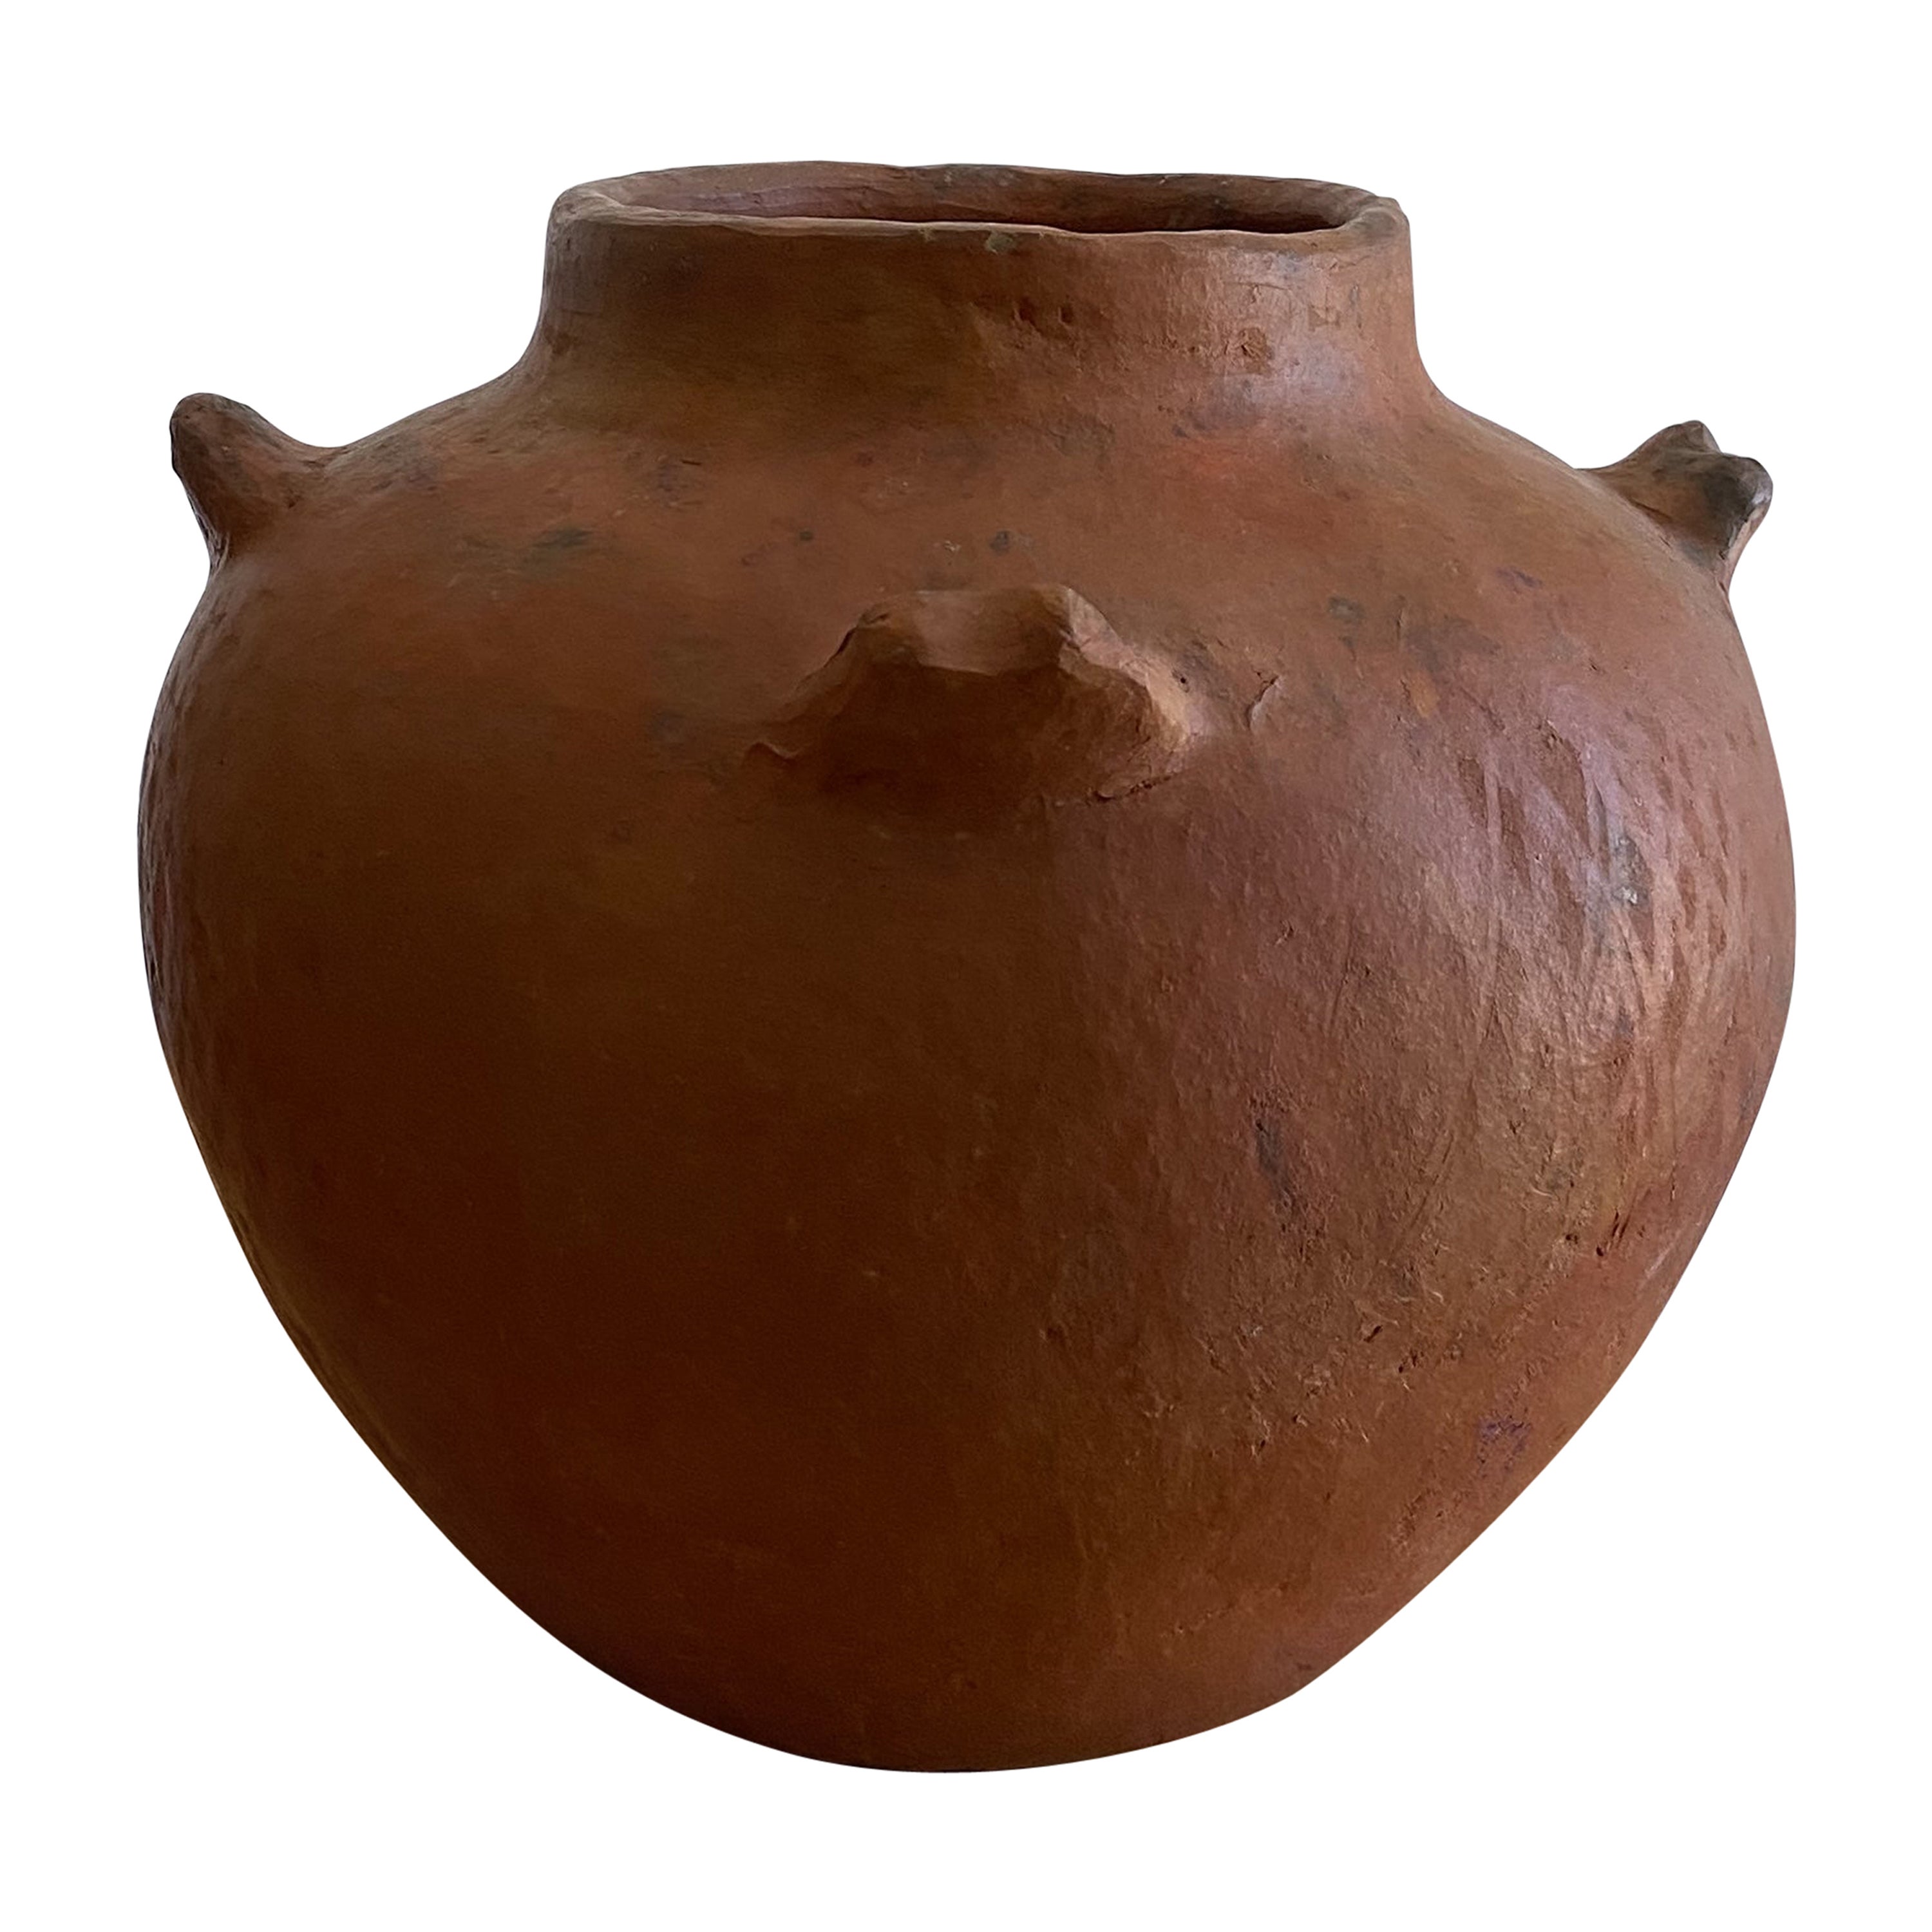 Ticino artisan made primitive terracotta ceramic vessel